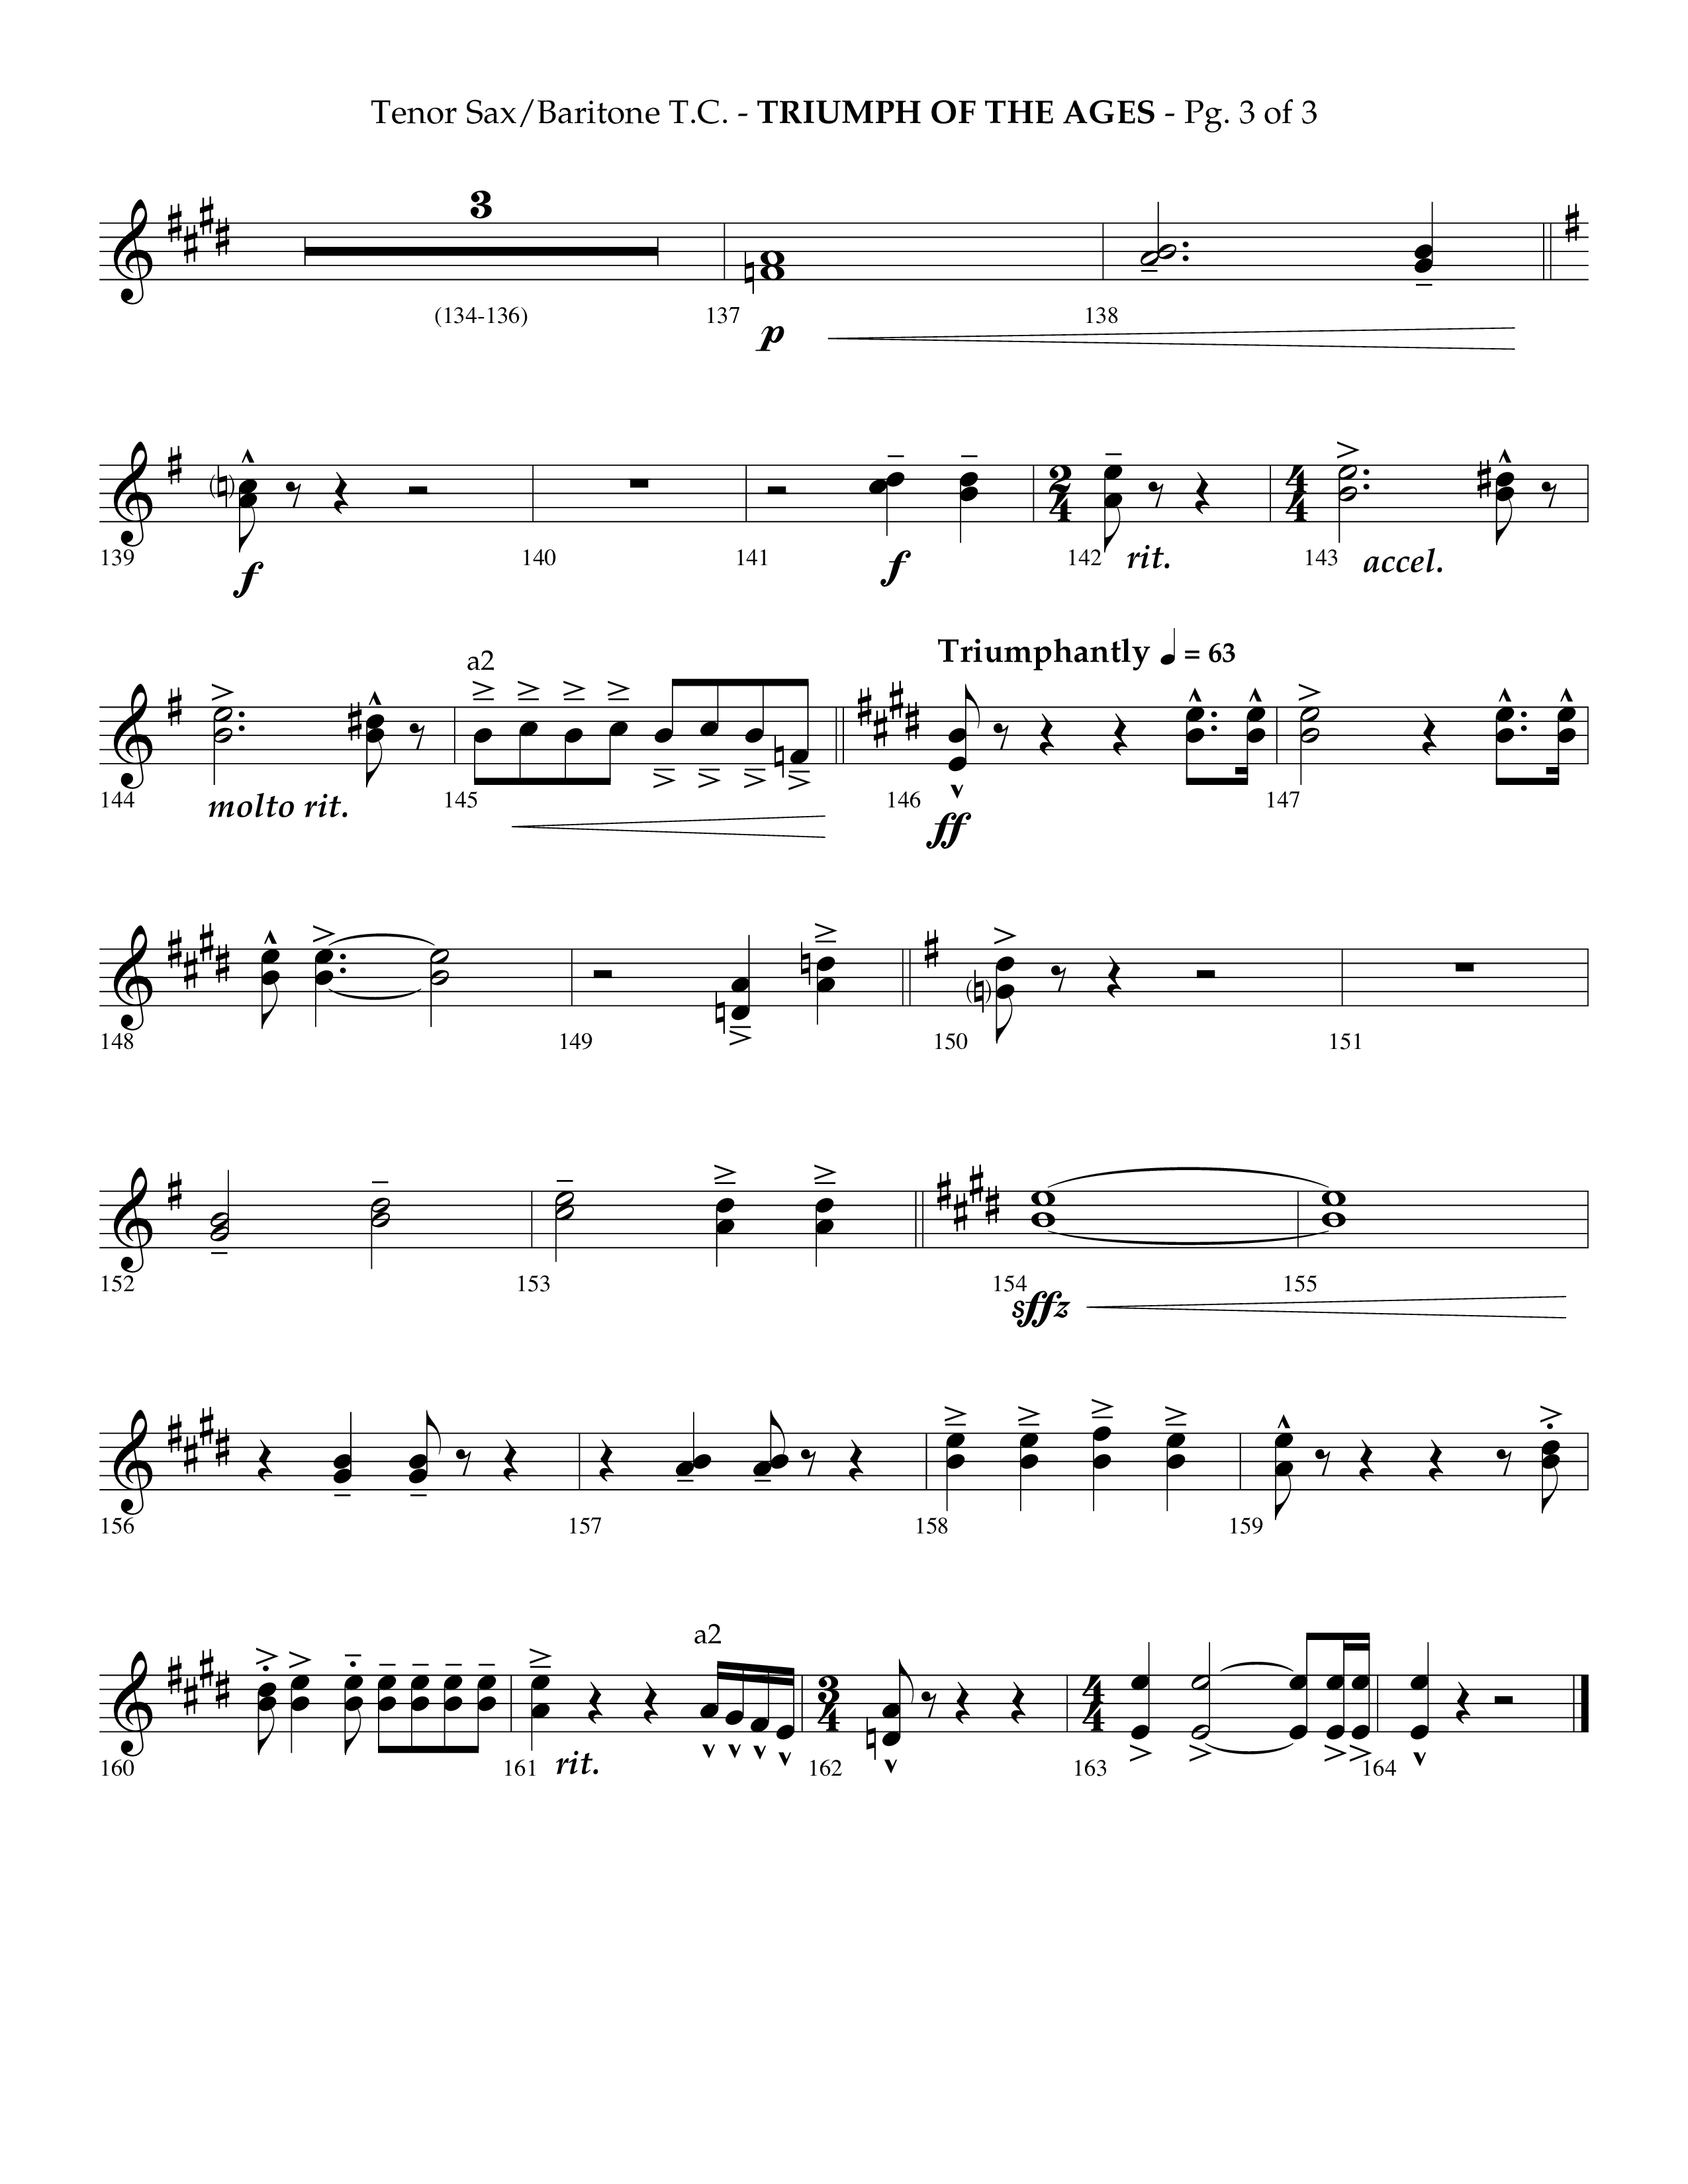 Triumph Of The Ages (Choral Anthem SATB) Tenor Sax/Baritone T.C. (Lifeway Choral / Arr. Phillip Keveren)